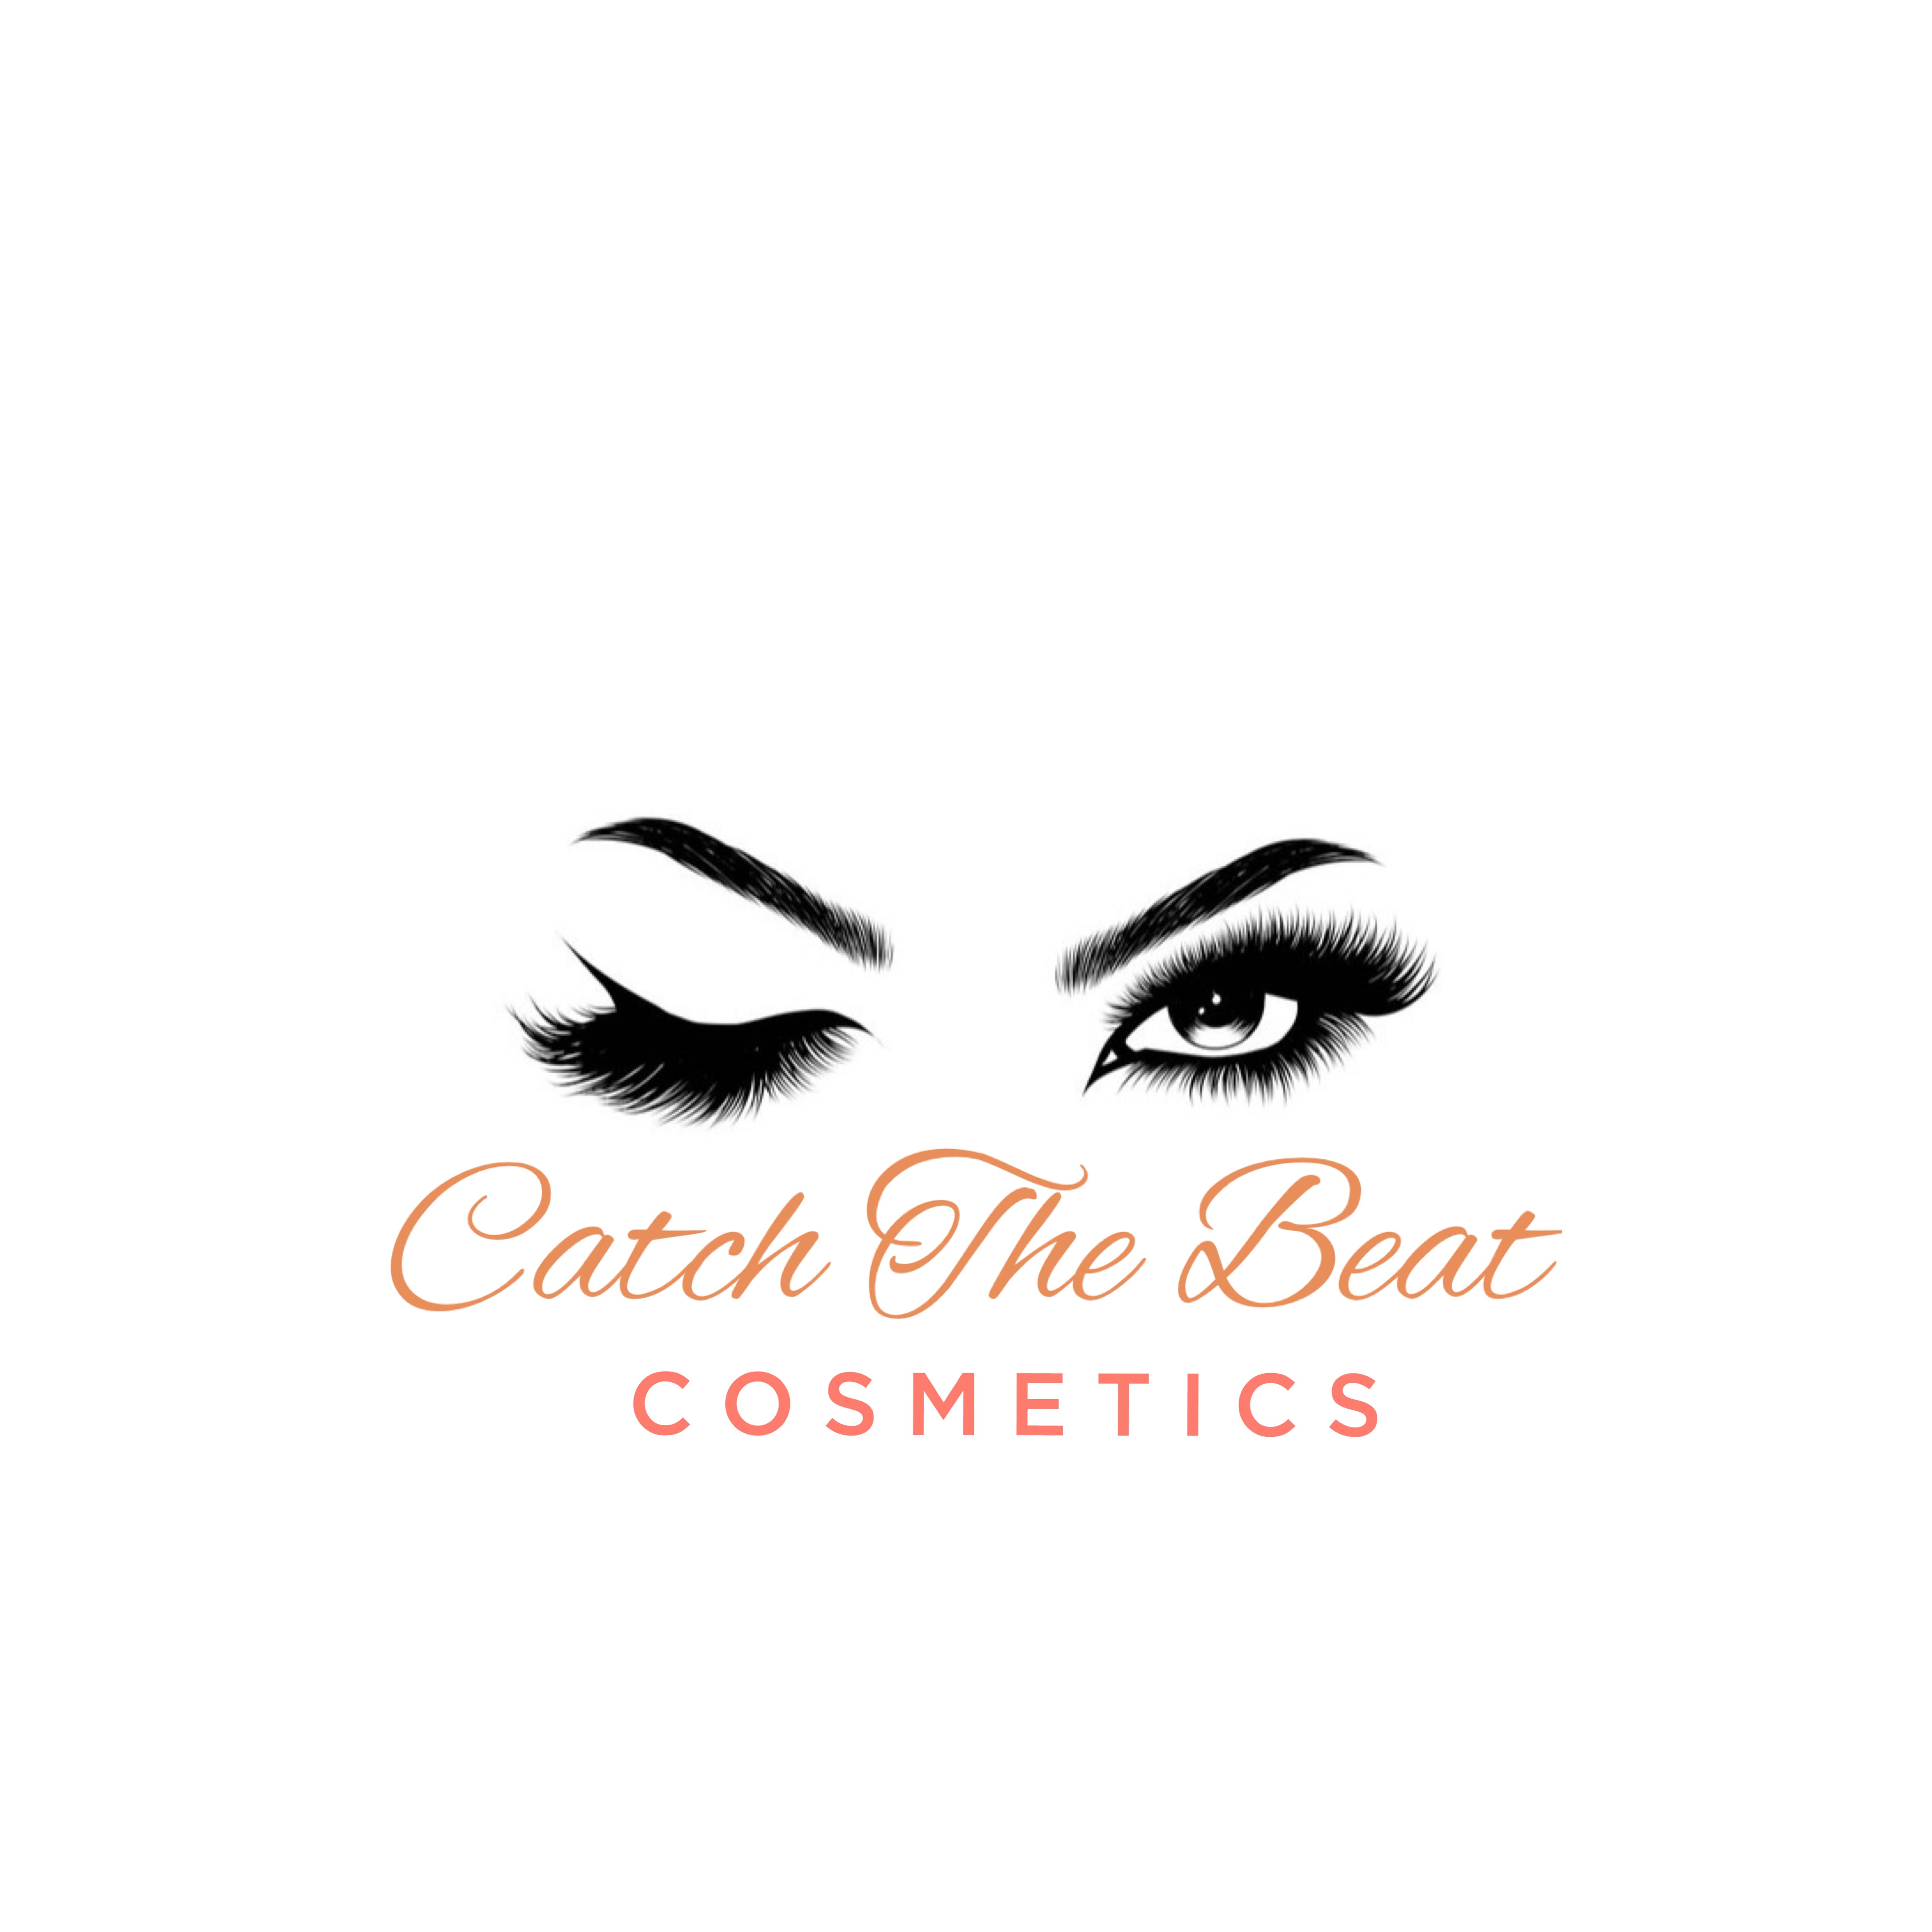 Catch The Beat Cosmetics